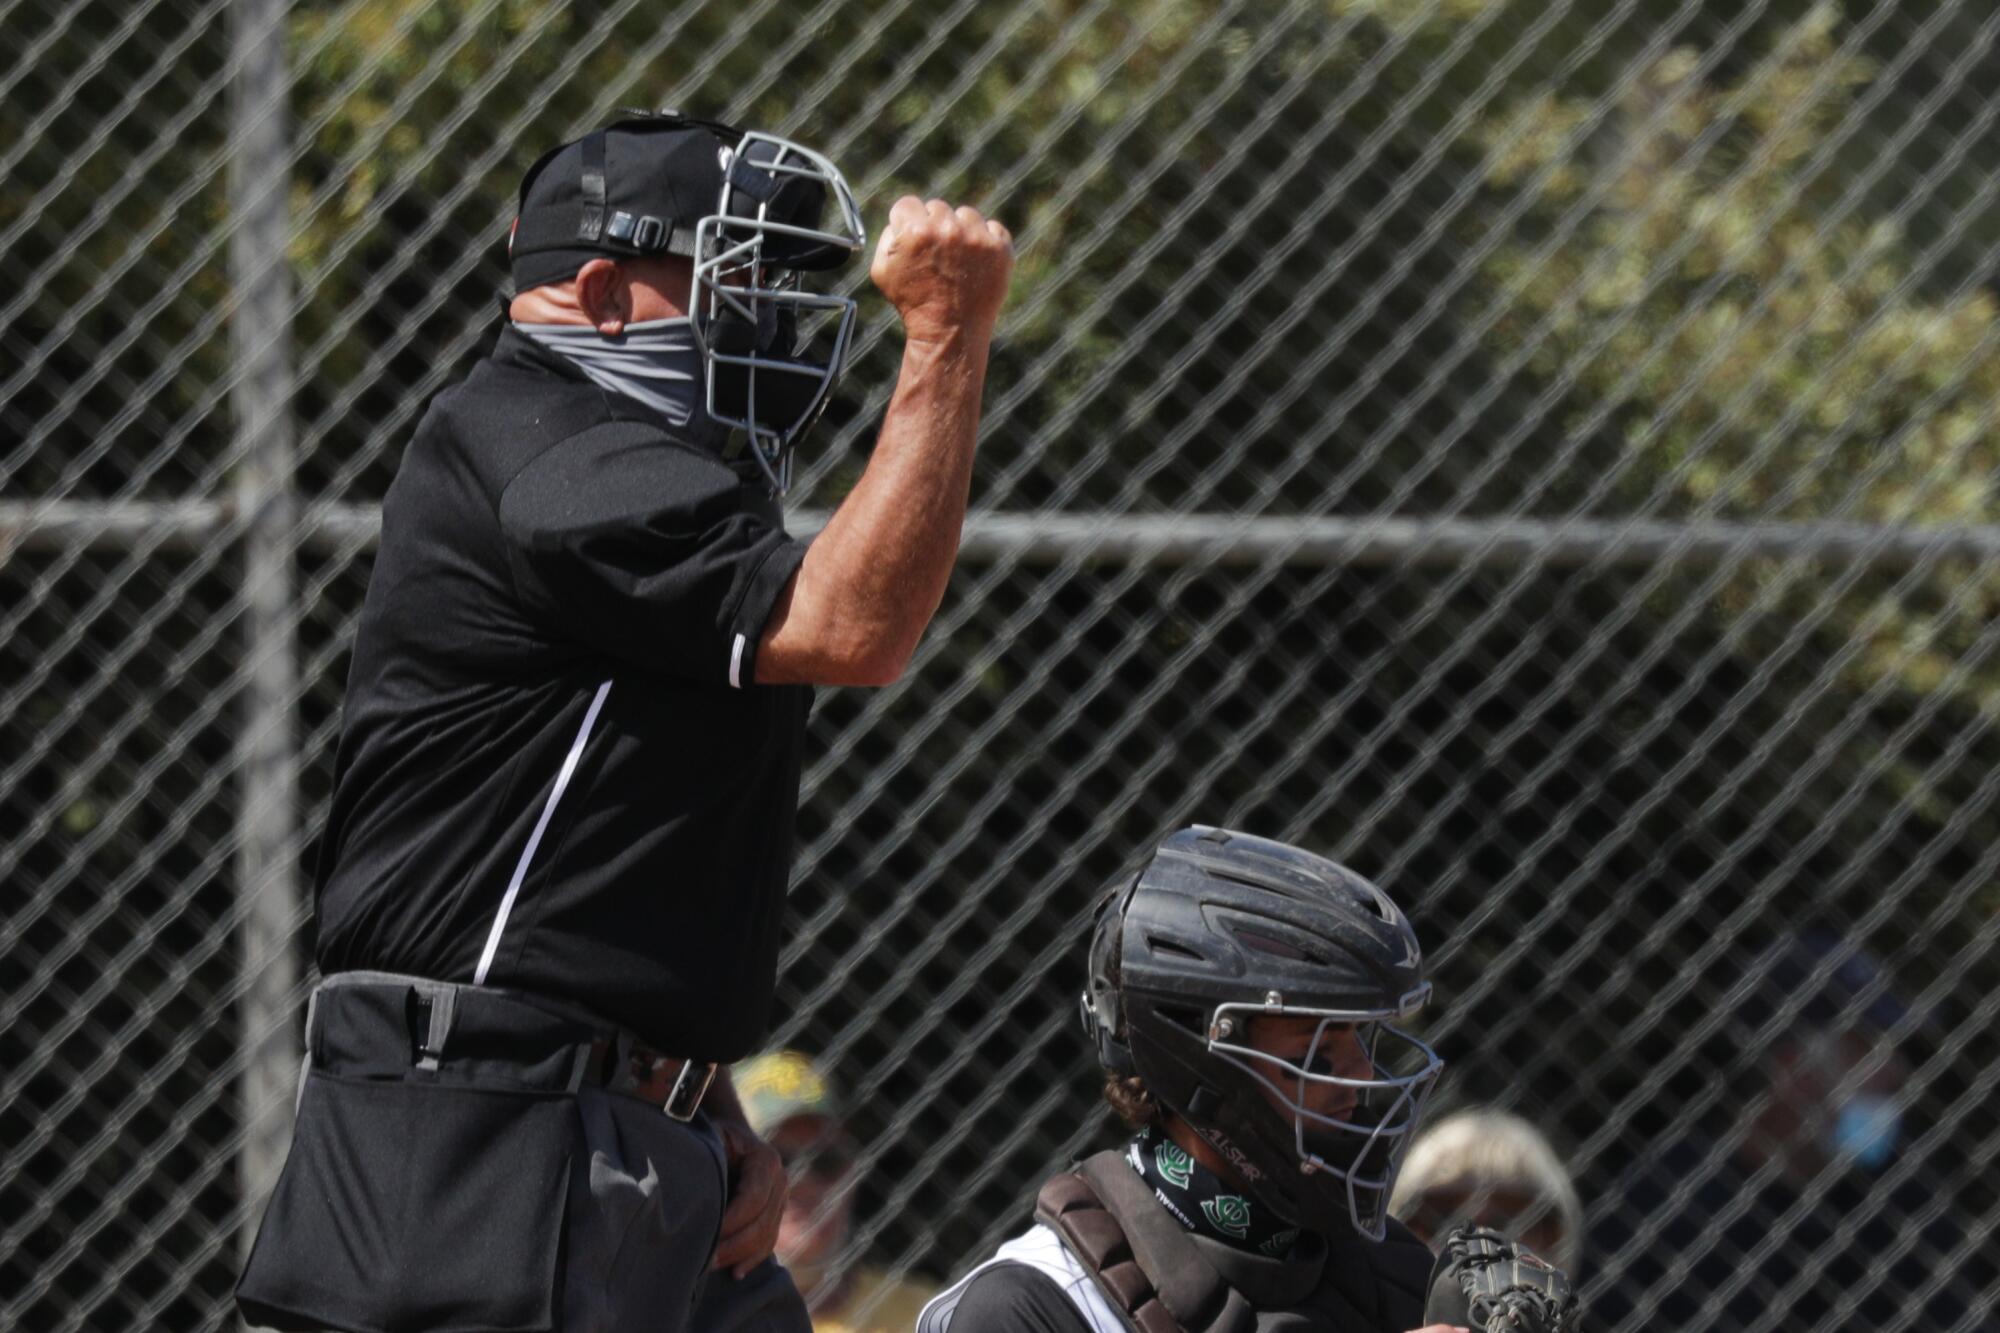 An umpire makes a call during a baseball game